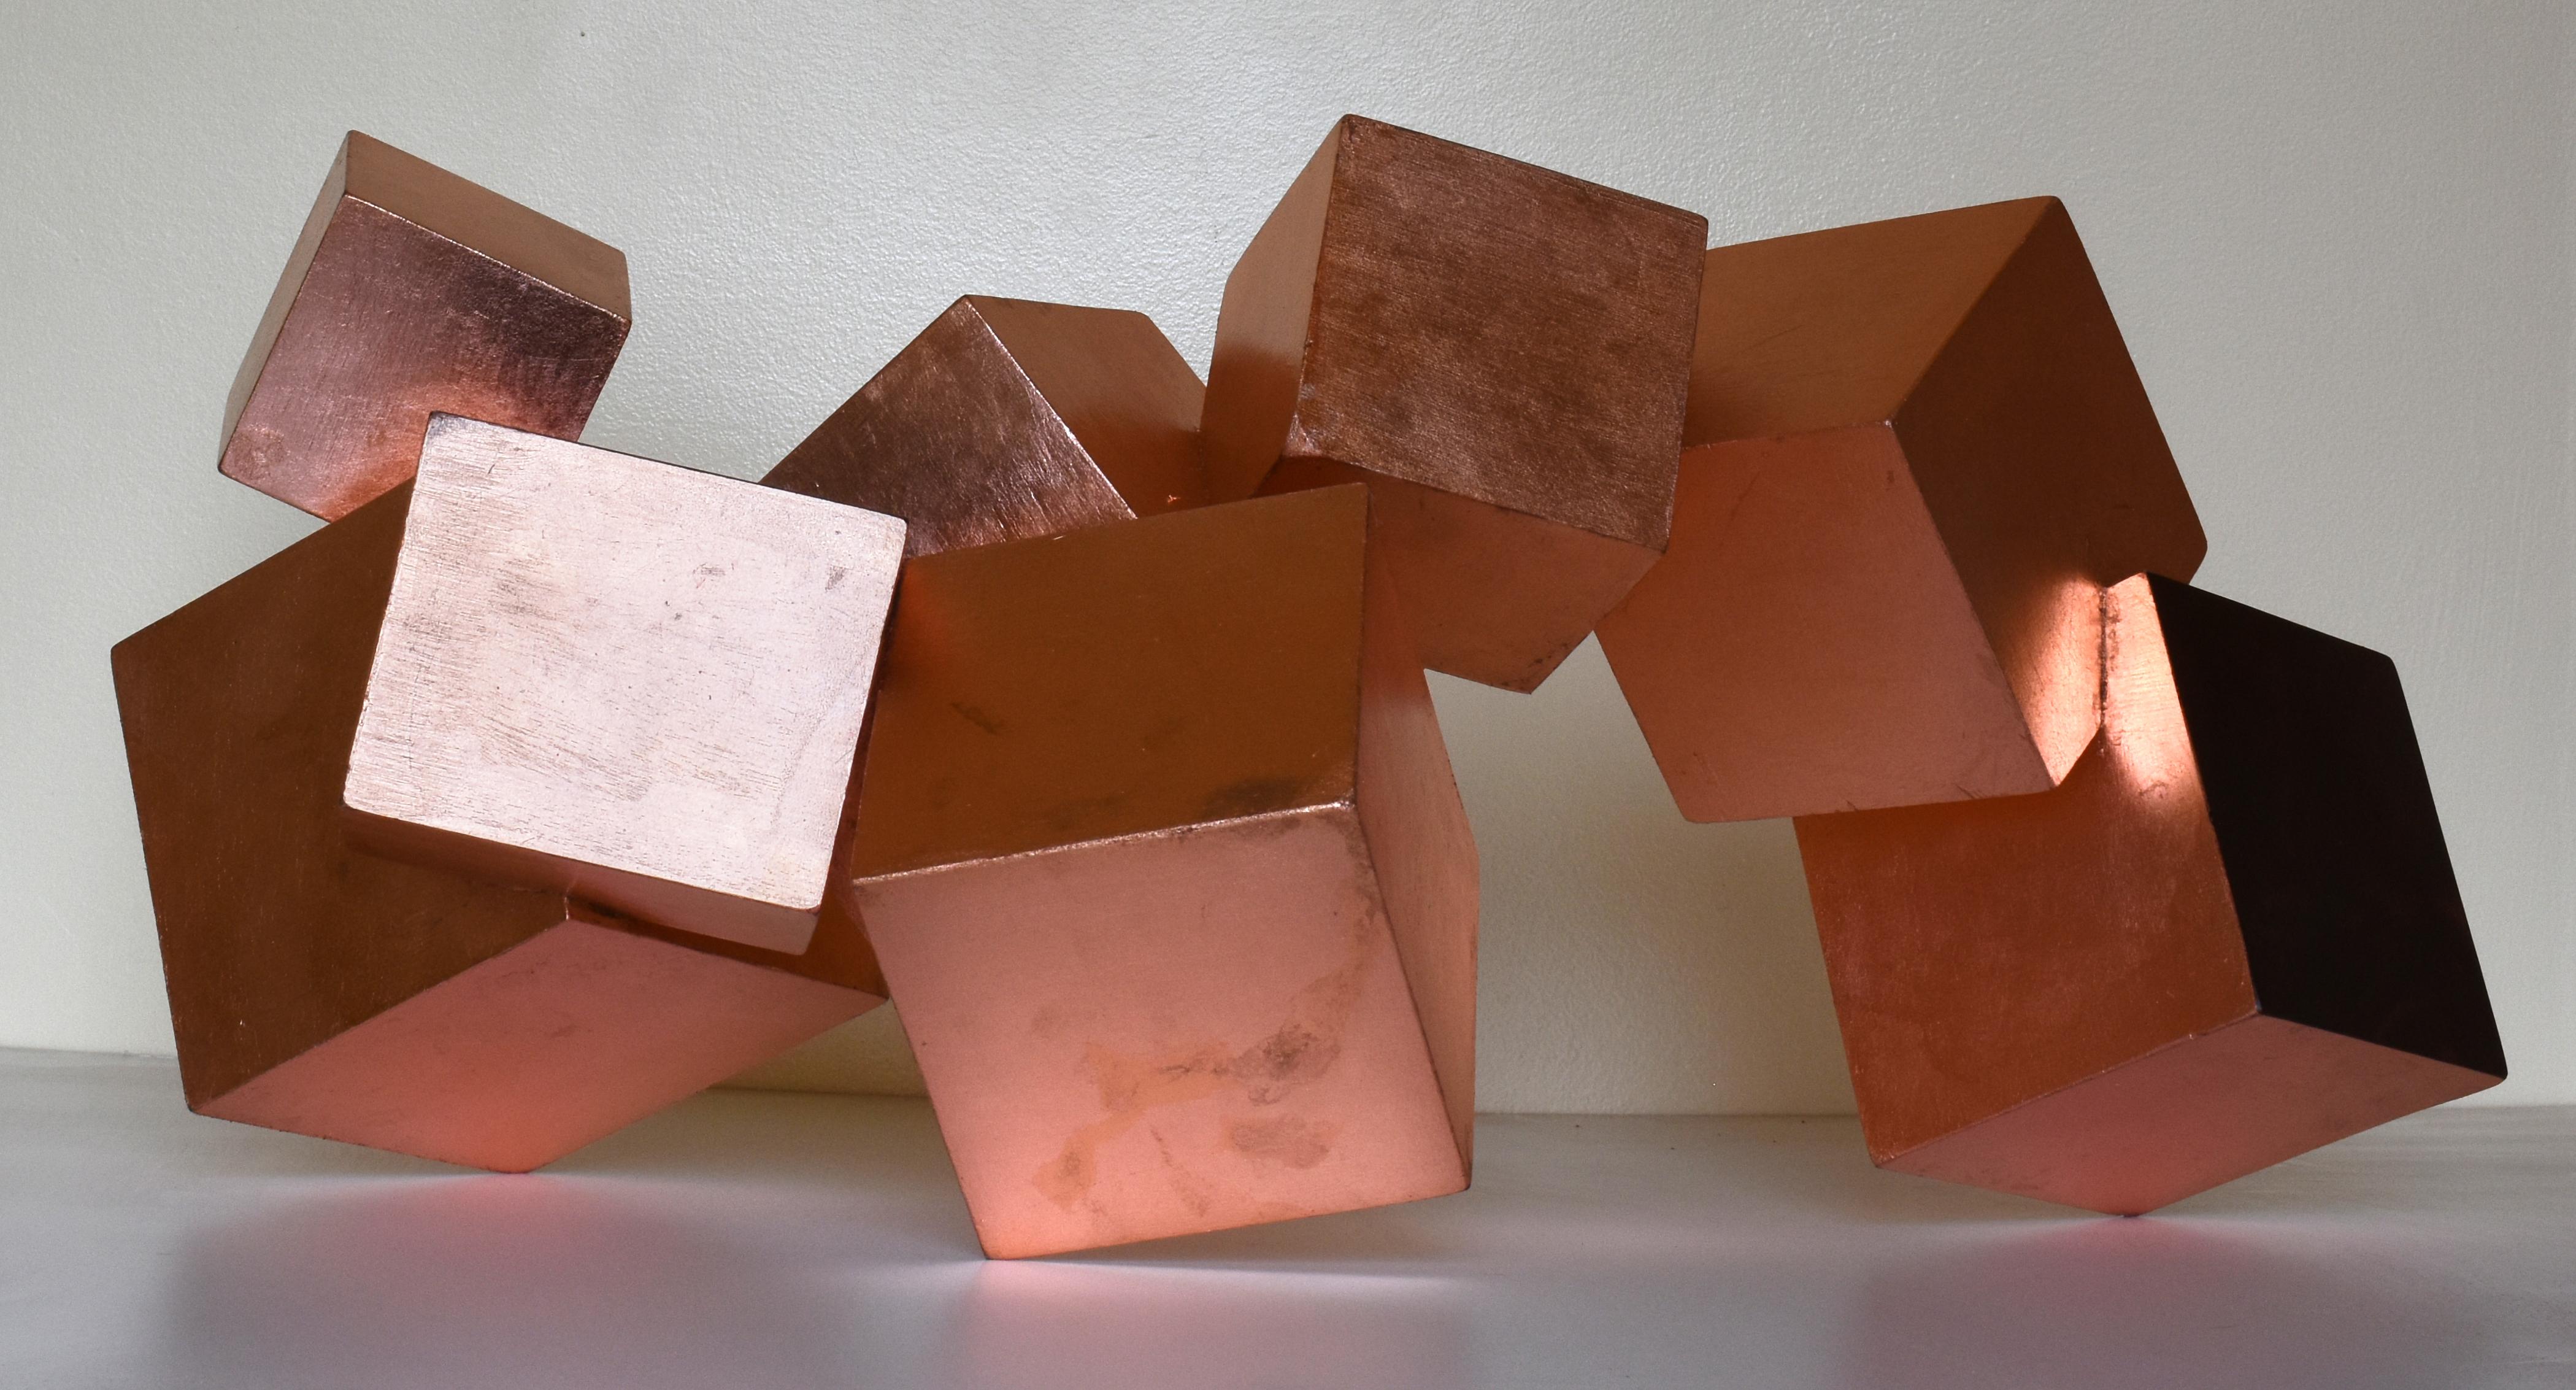 Copper and Mahogany Pyrite (exotic wood, metallic, cubic, table top sculpture) 4